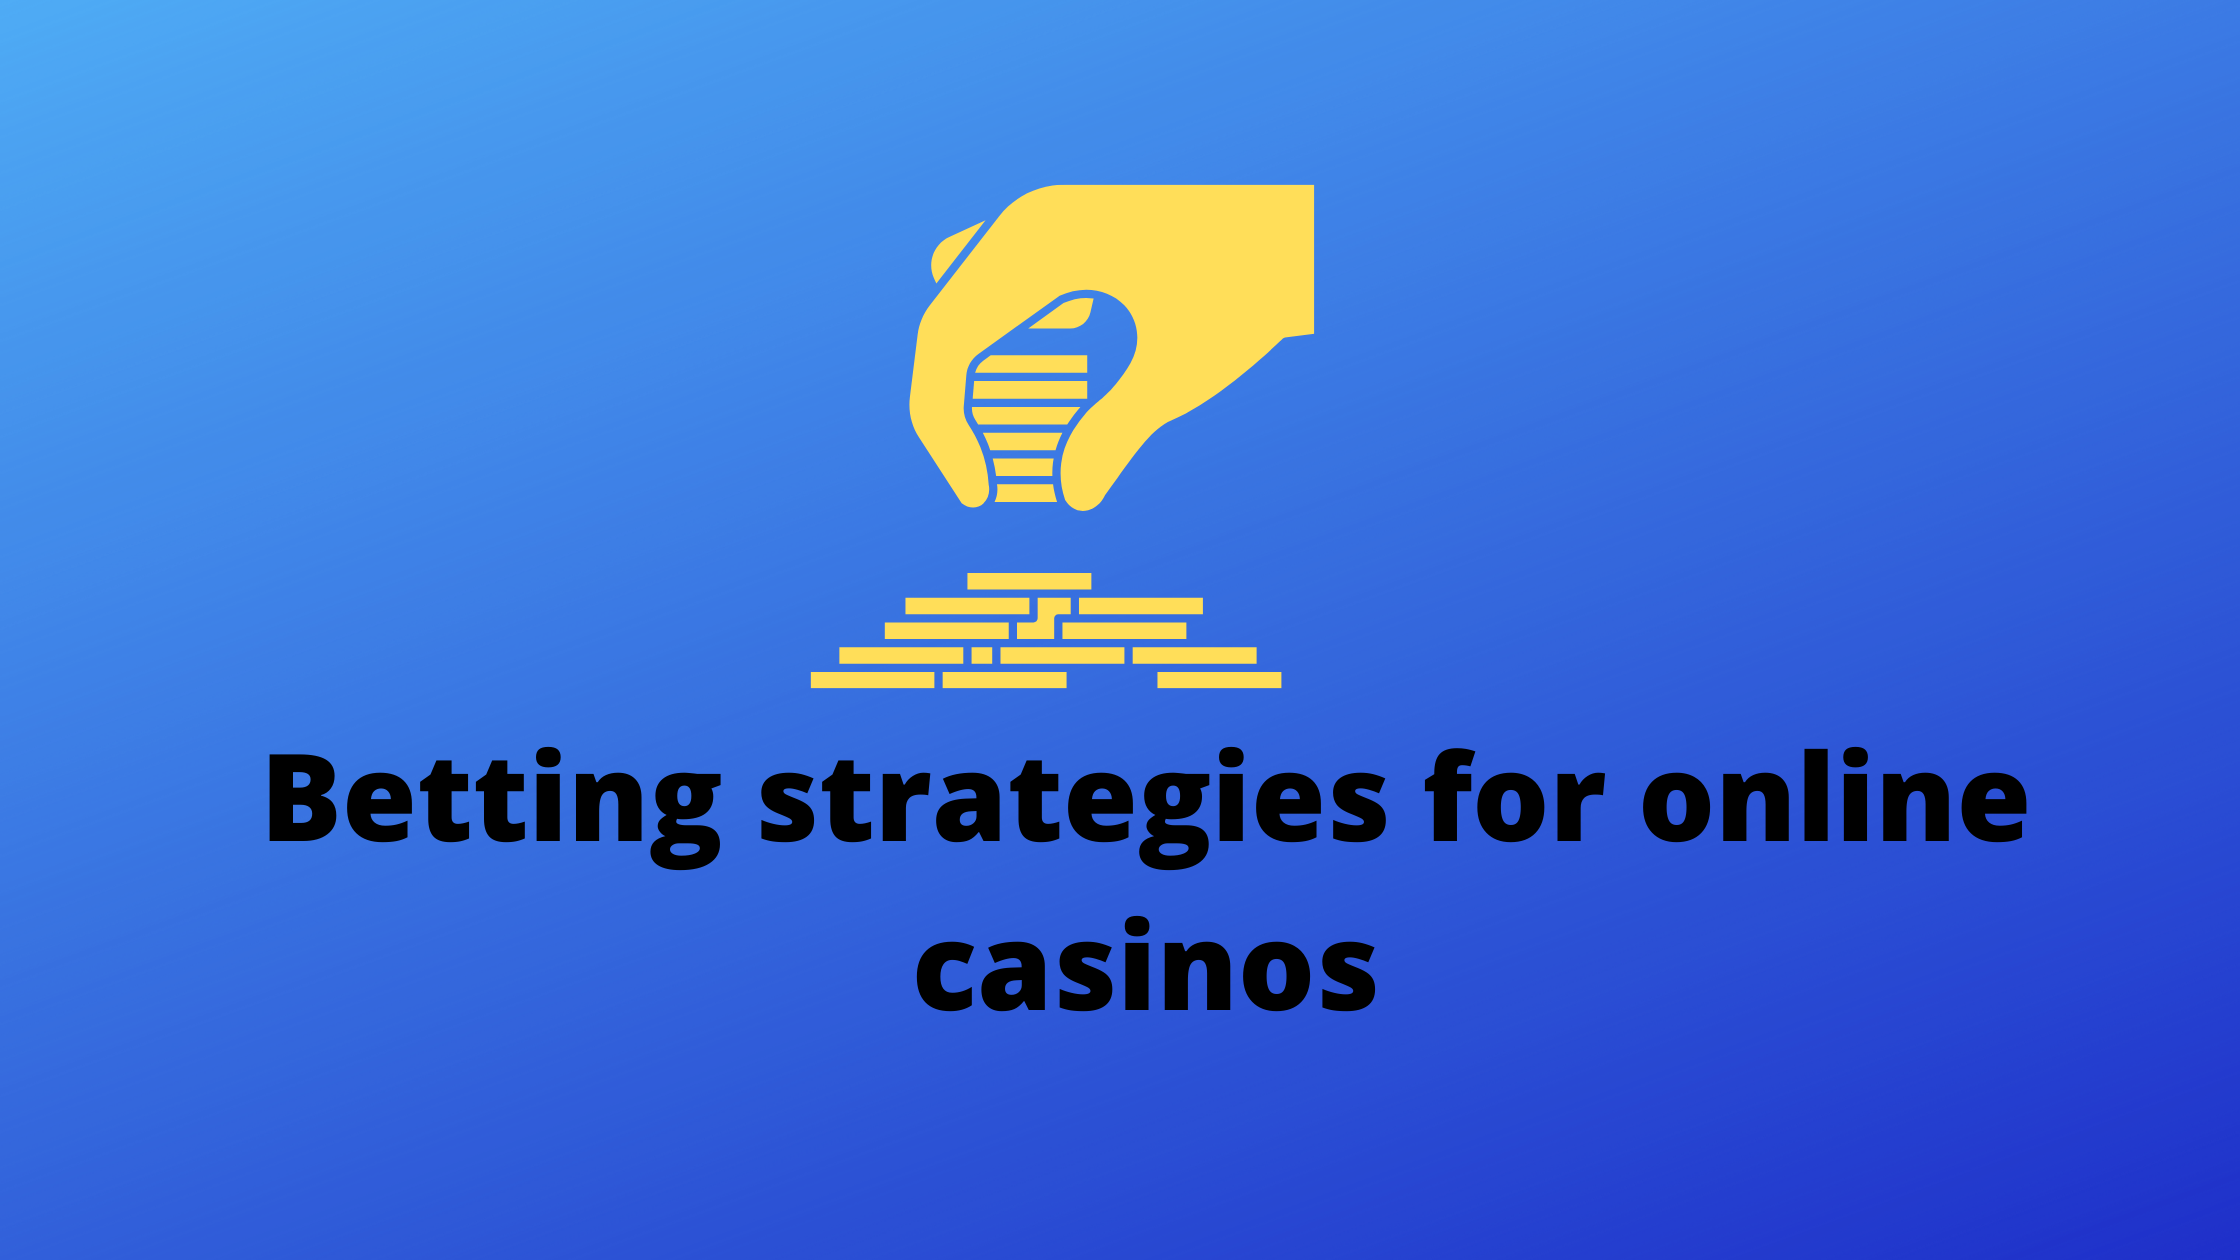 Betting strategies for online casinos